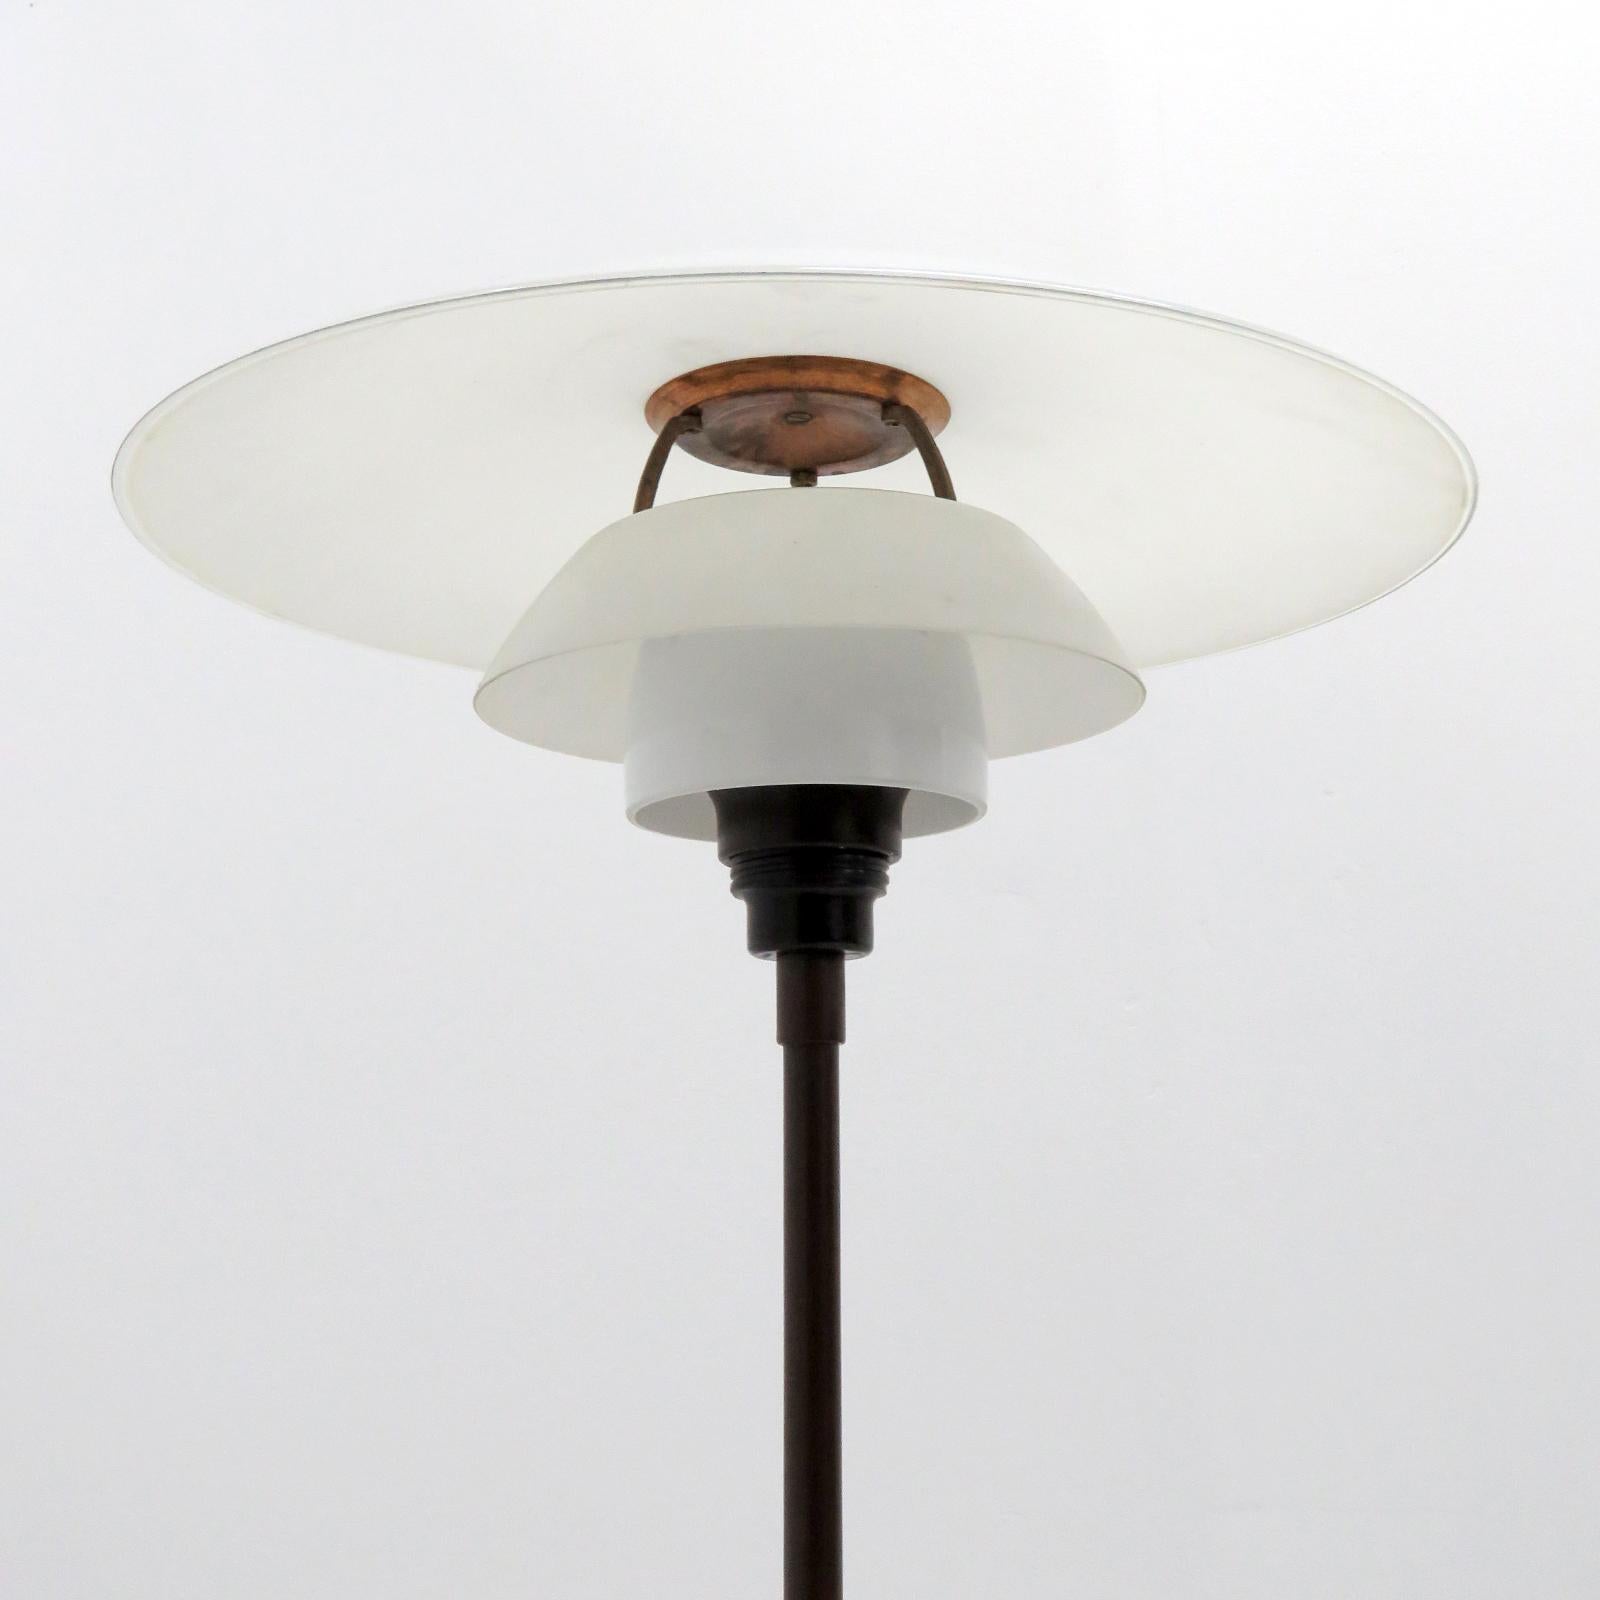 Scandinavian Modern Poul Henningsen PH 4/3 Floor Lamp, 1930